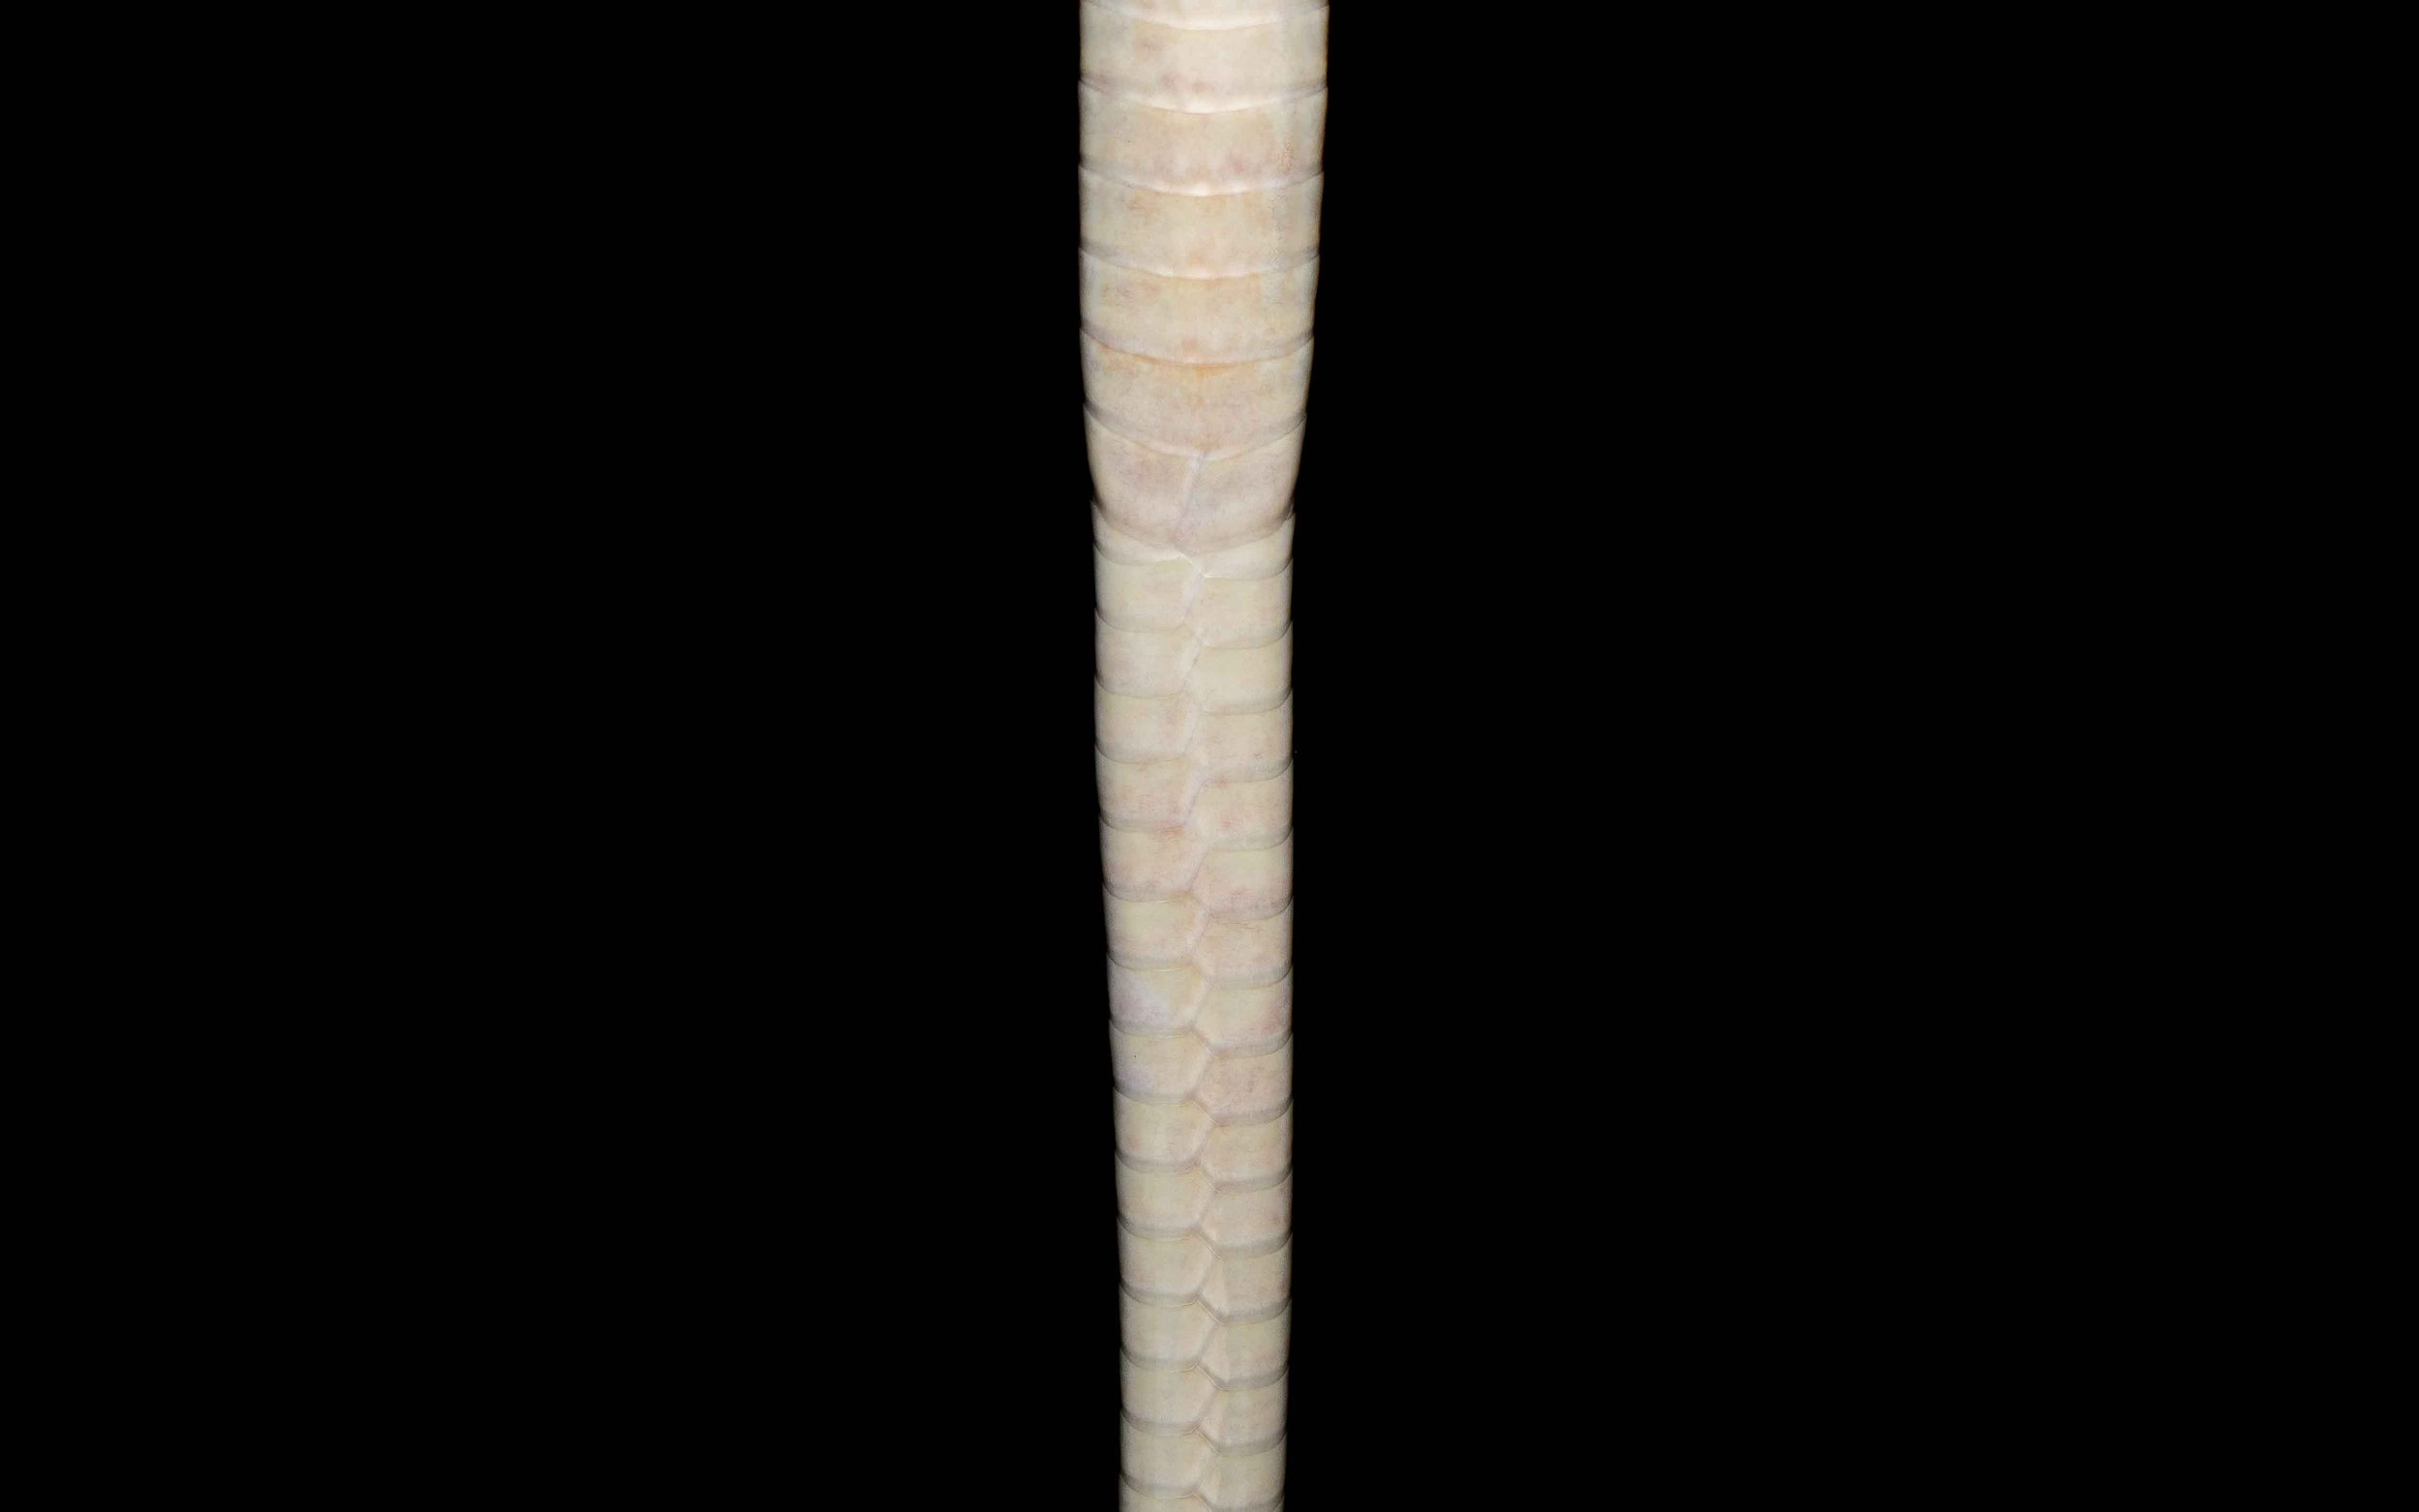 White-bellied Rat Snake - Ptyas fusca